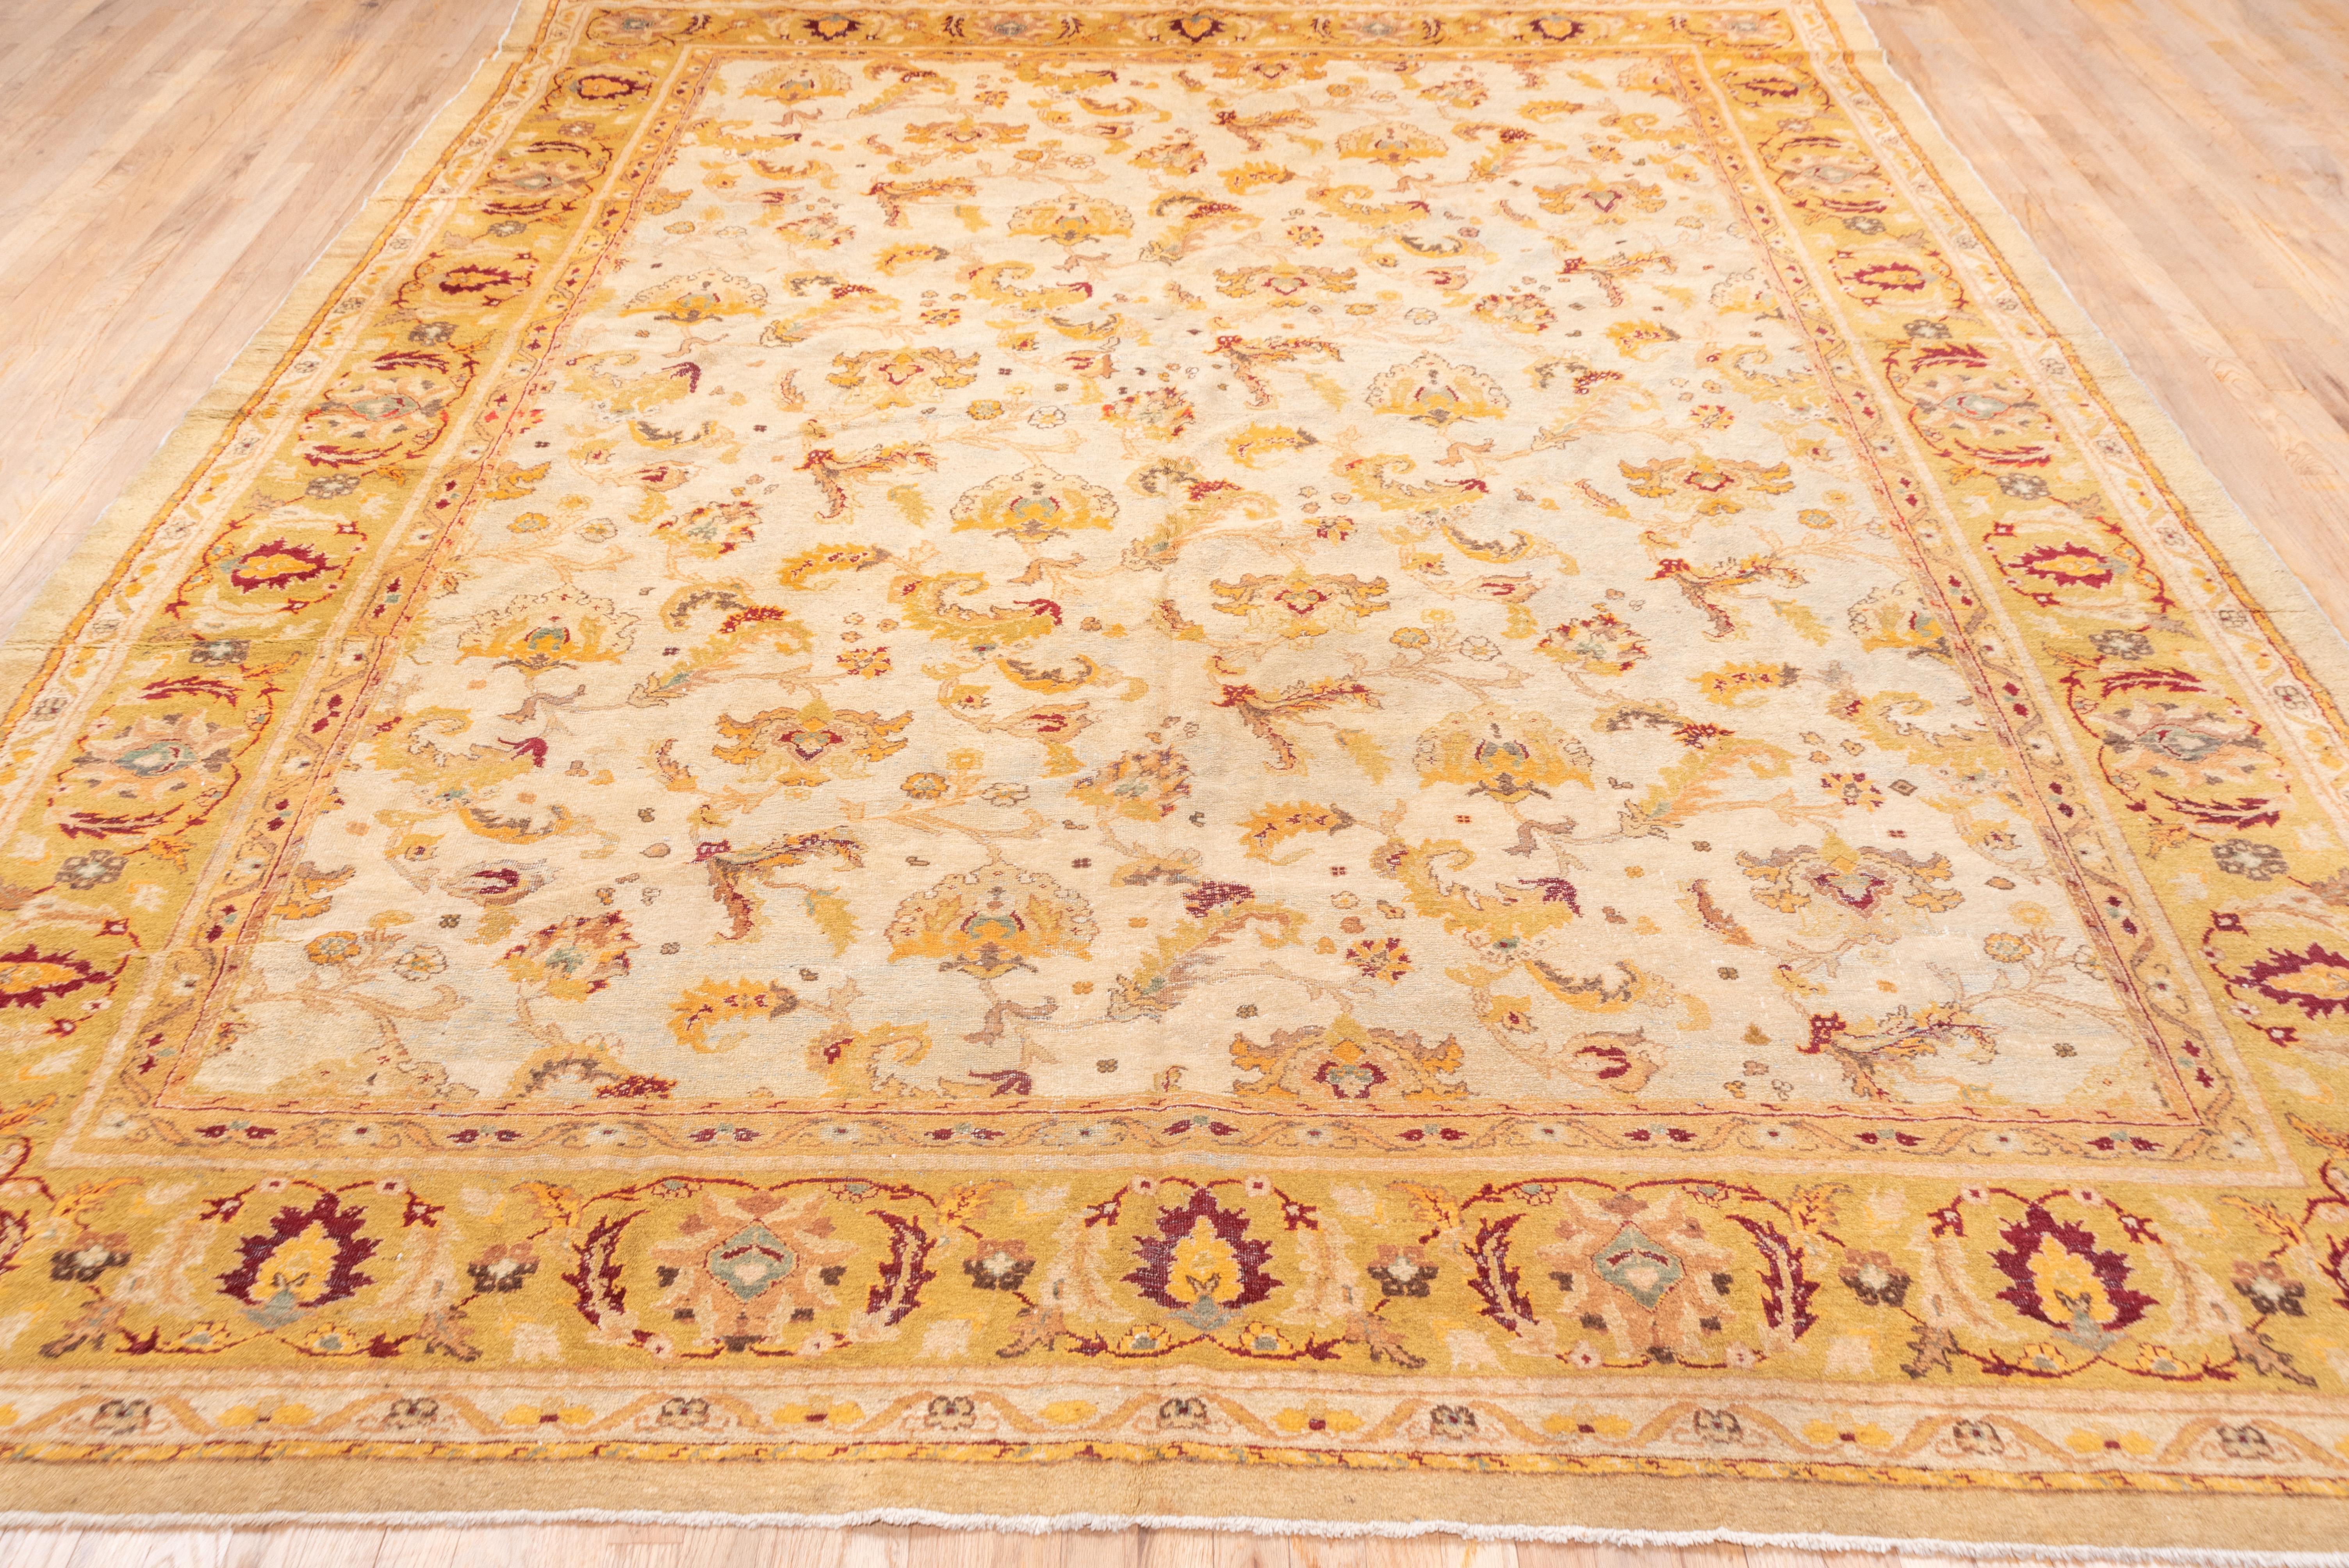 Agra Fine Antique Indian Amritzar Carpet, Ivory Field, Allover Field, Gold Borders For Sale